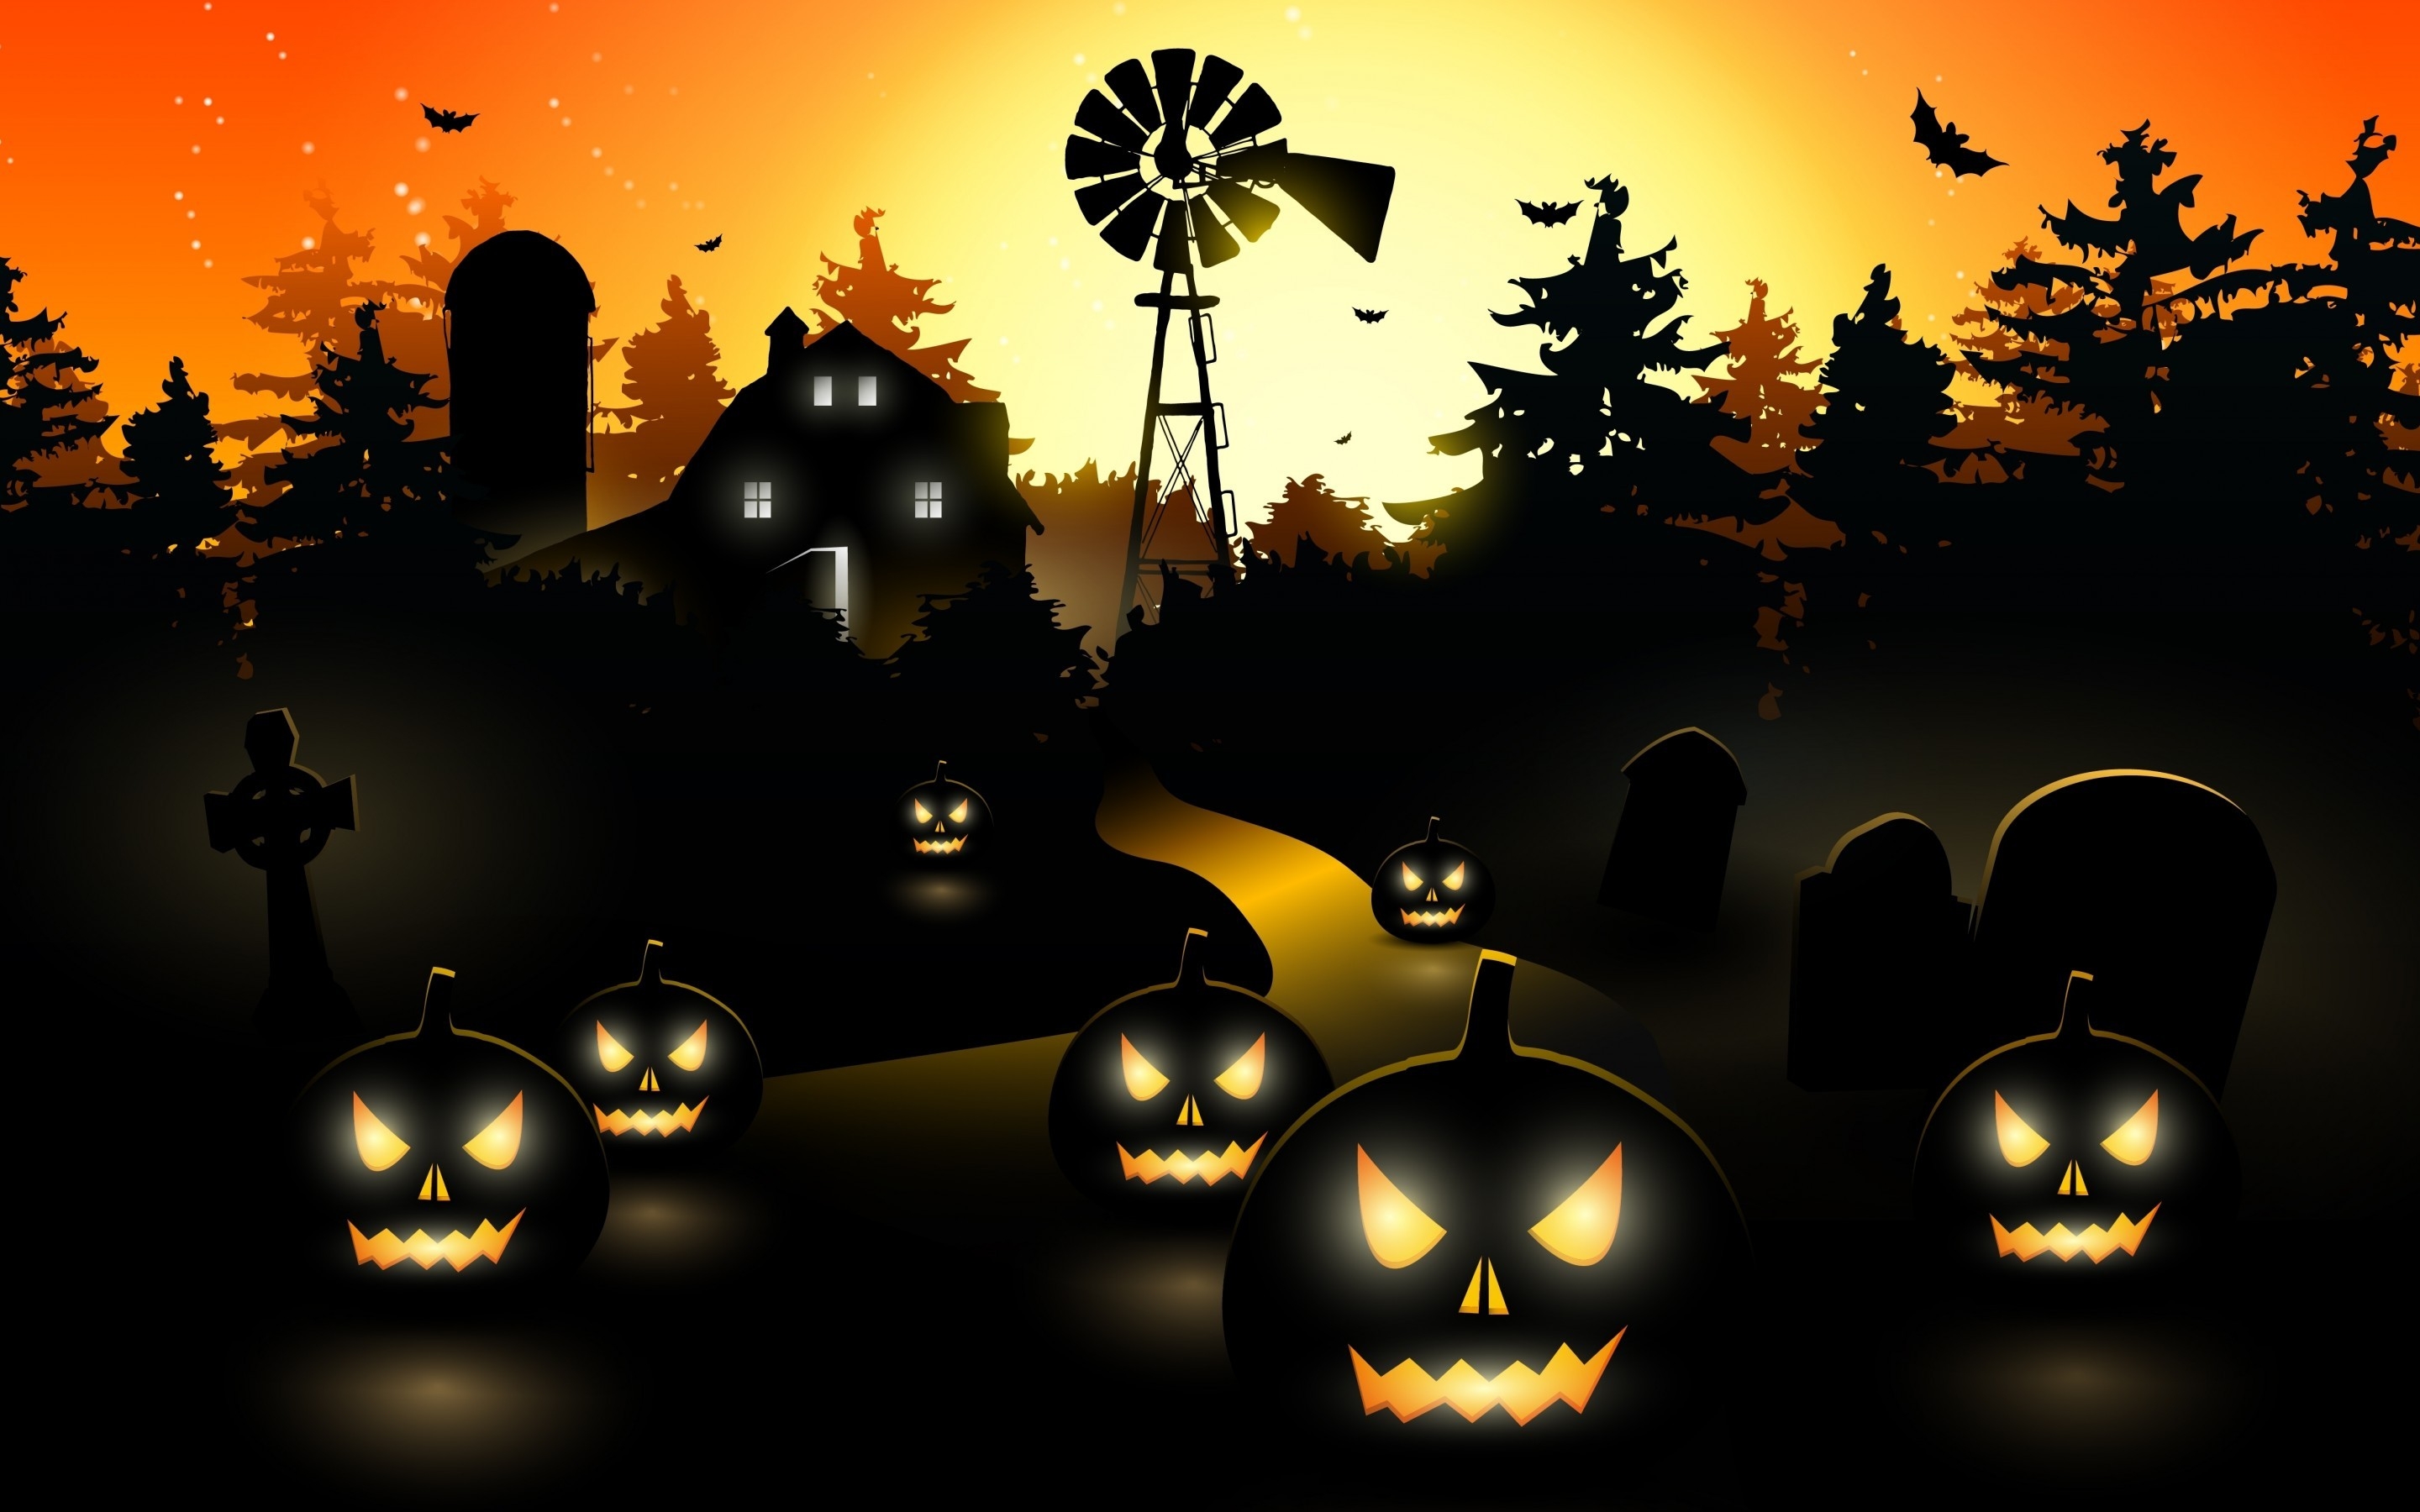 Halloween Black City for 2880 x 1800 Retina Display resolution